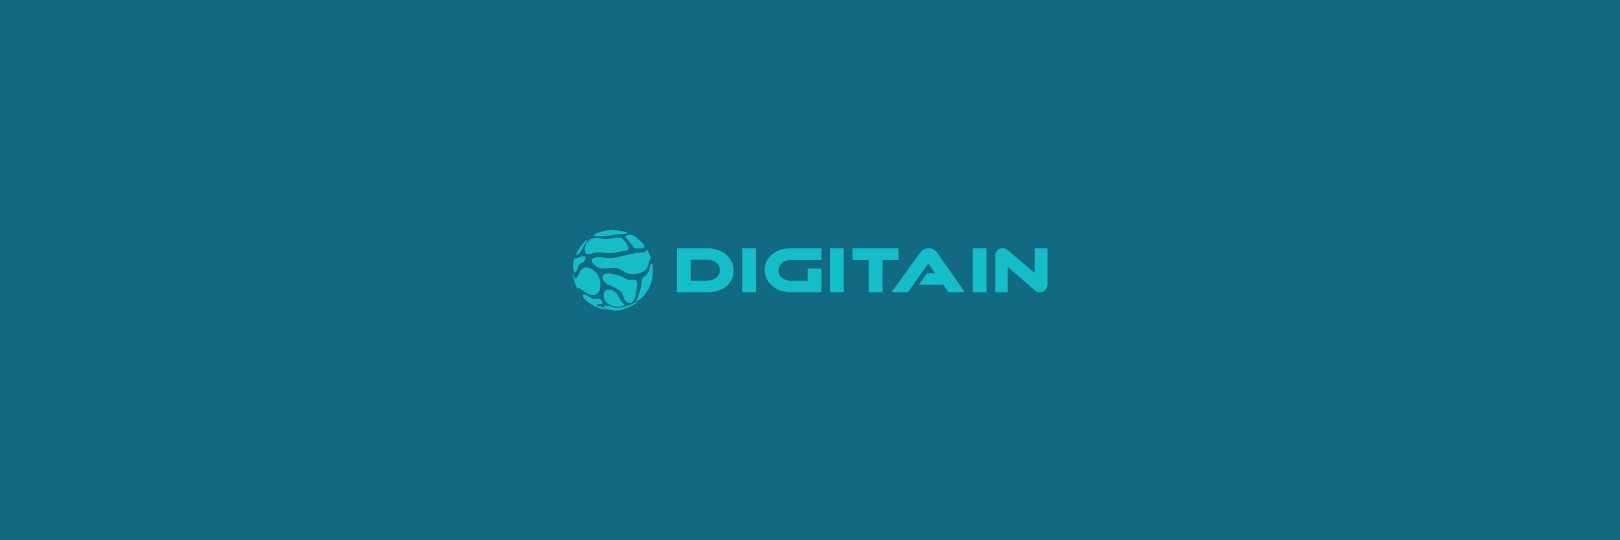 Digitain visual identity design by Indigo branding